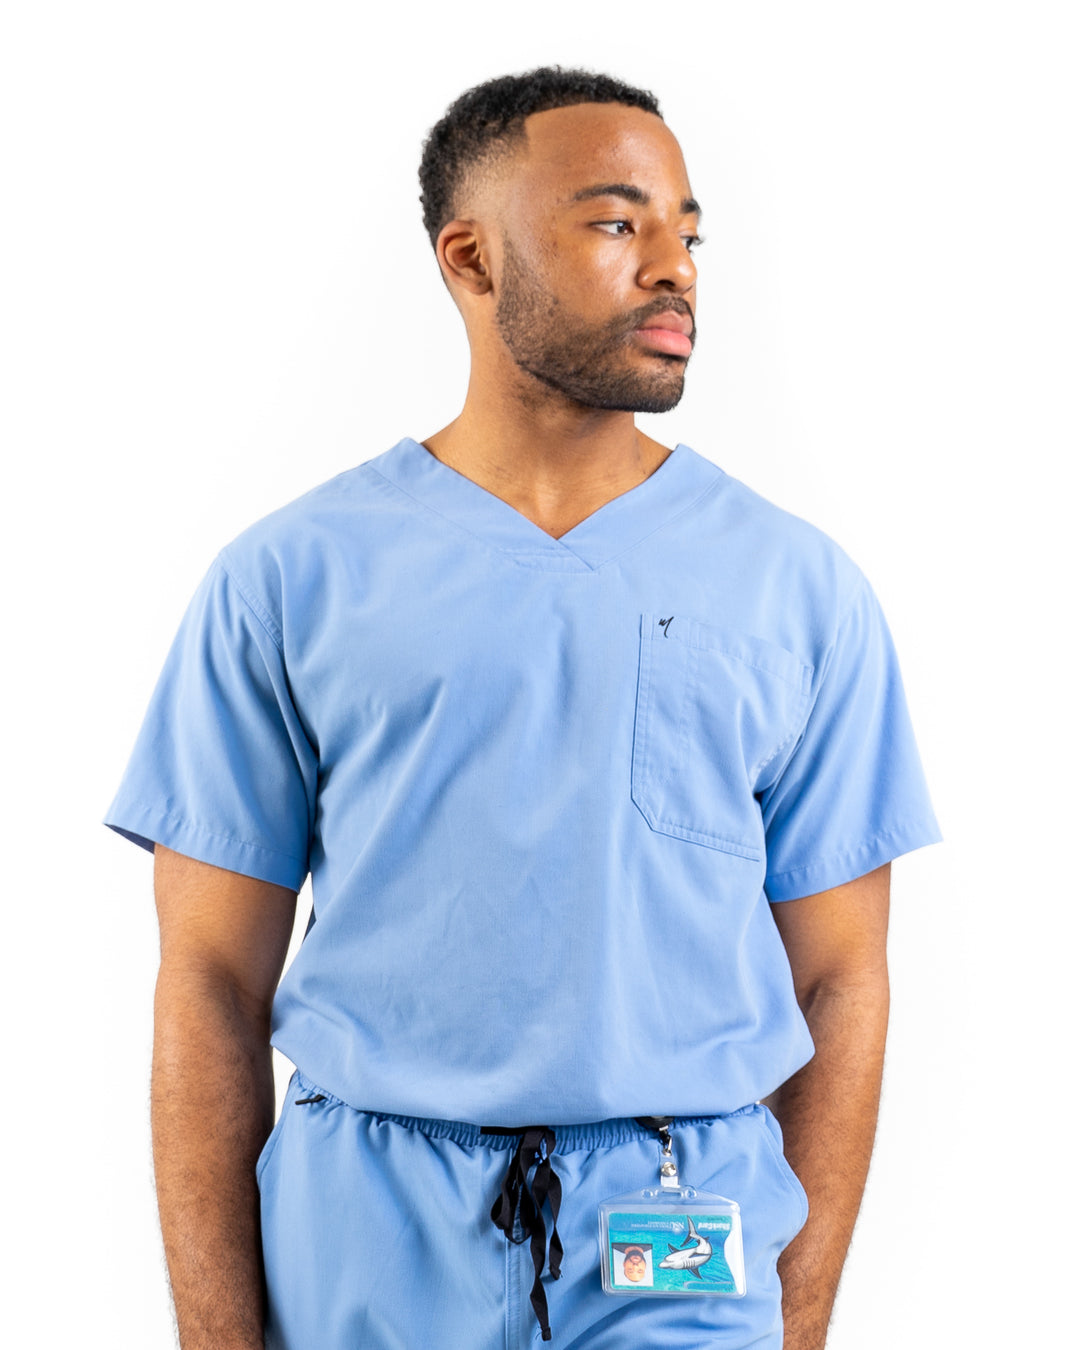 men's Ceil Blue Scrub Top - Jogger Scrubs by Millennials In Medicine (Mim Scrubs)